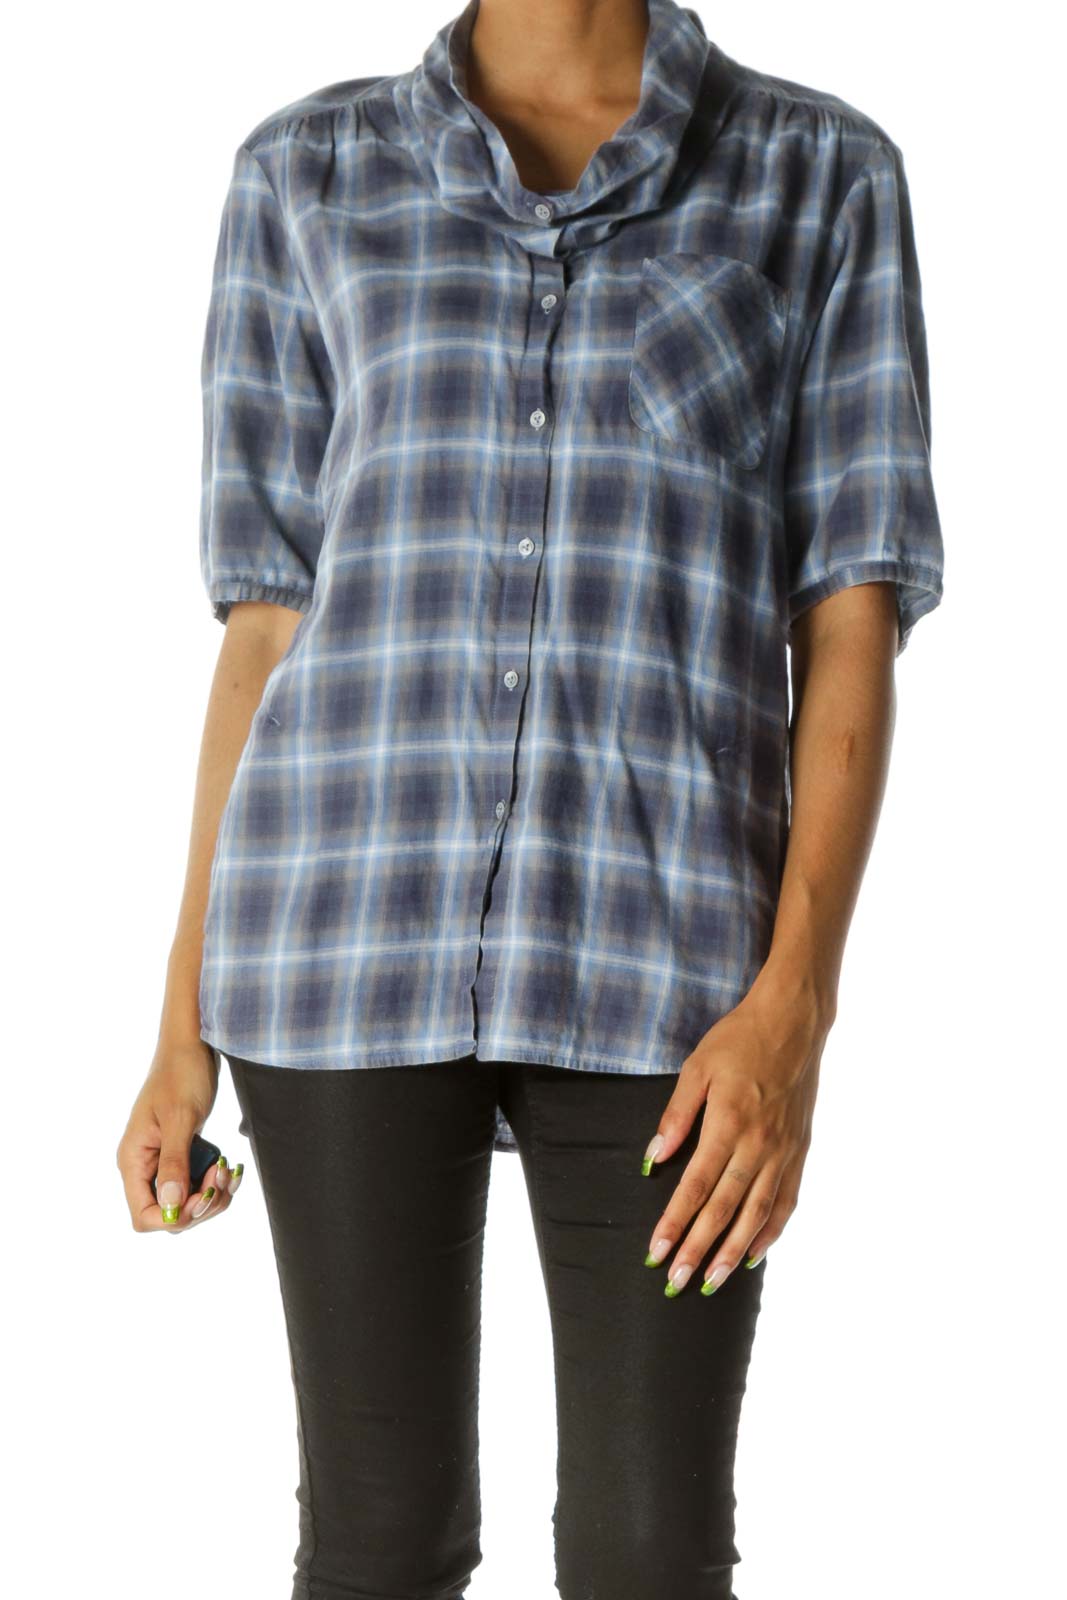 Blue Gray Plaid 100% Cotton Long 3/4 Sleeve Shirt Front